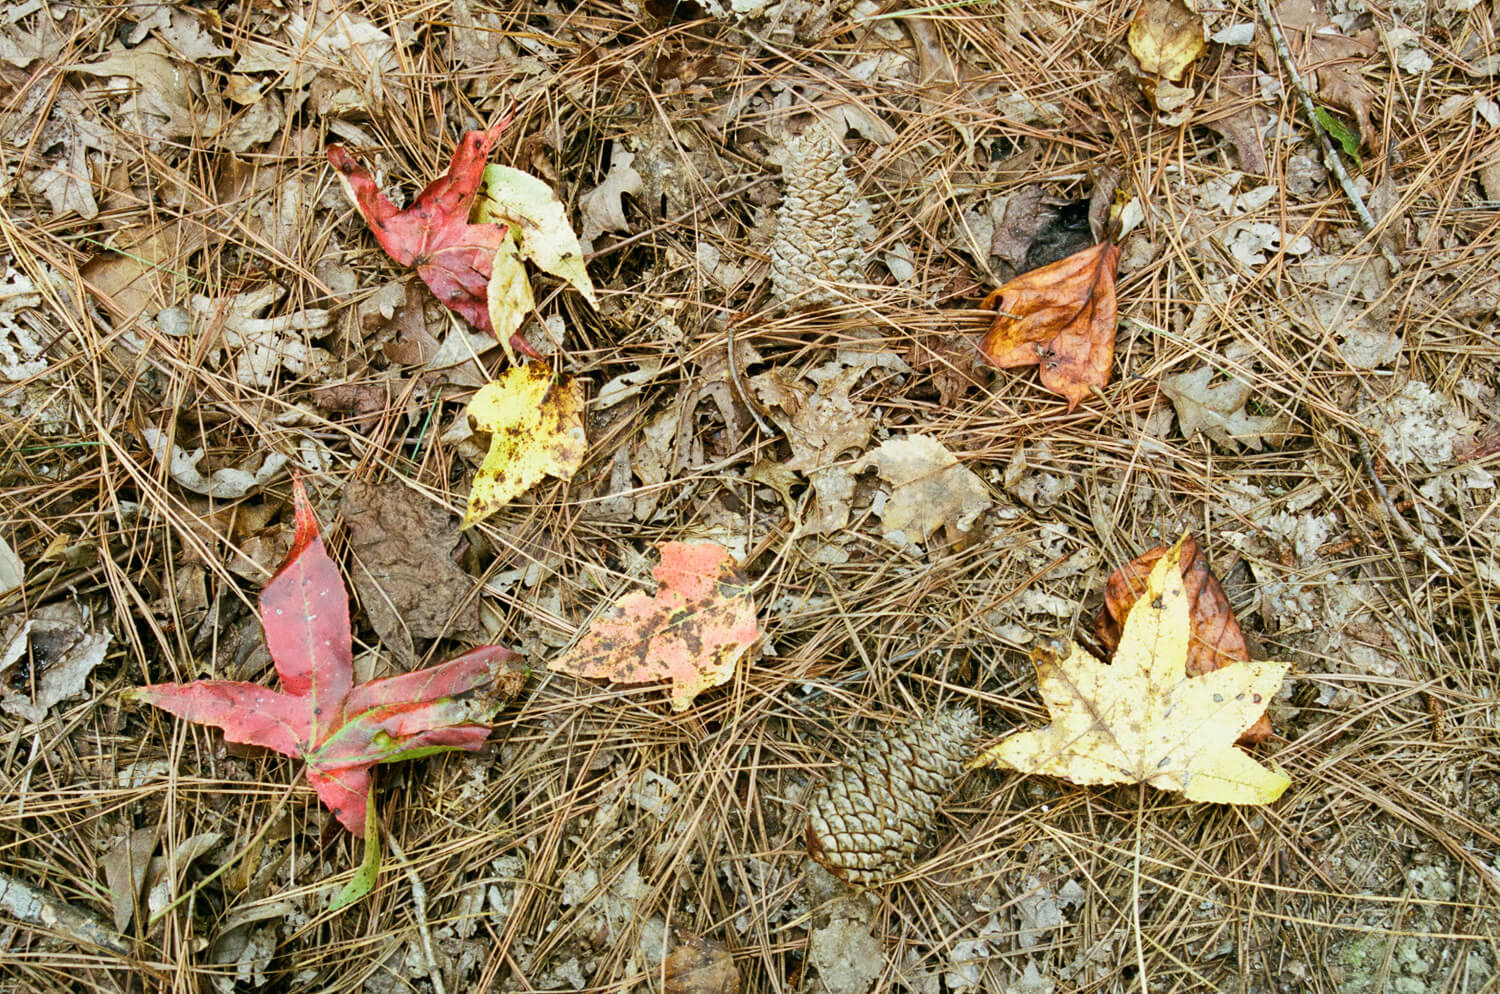 Fallen Leaves - October 10 9:06 AM